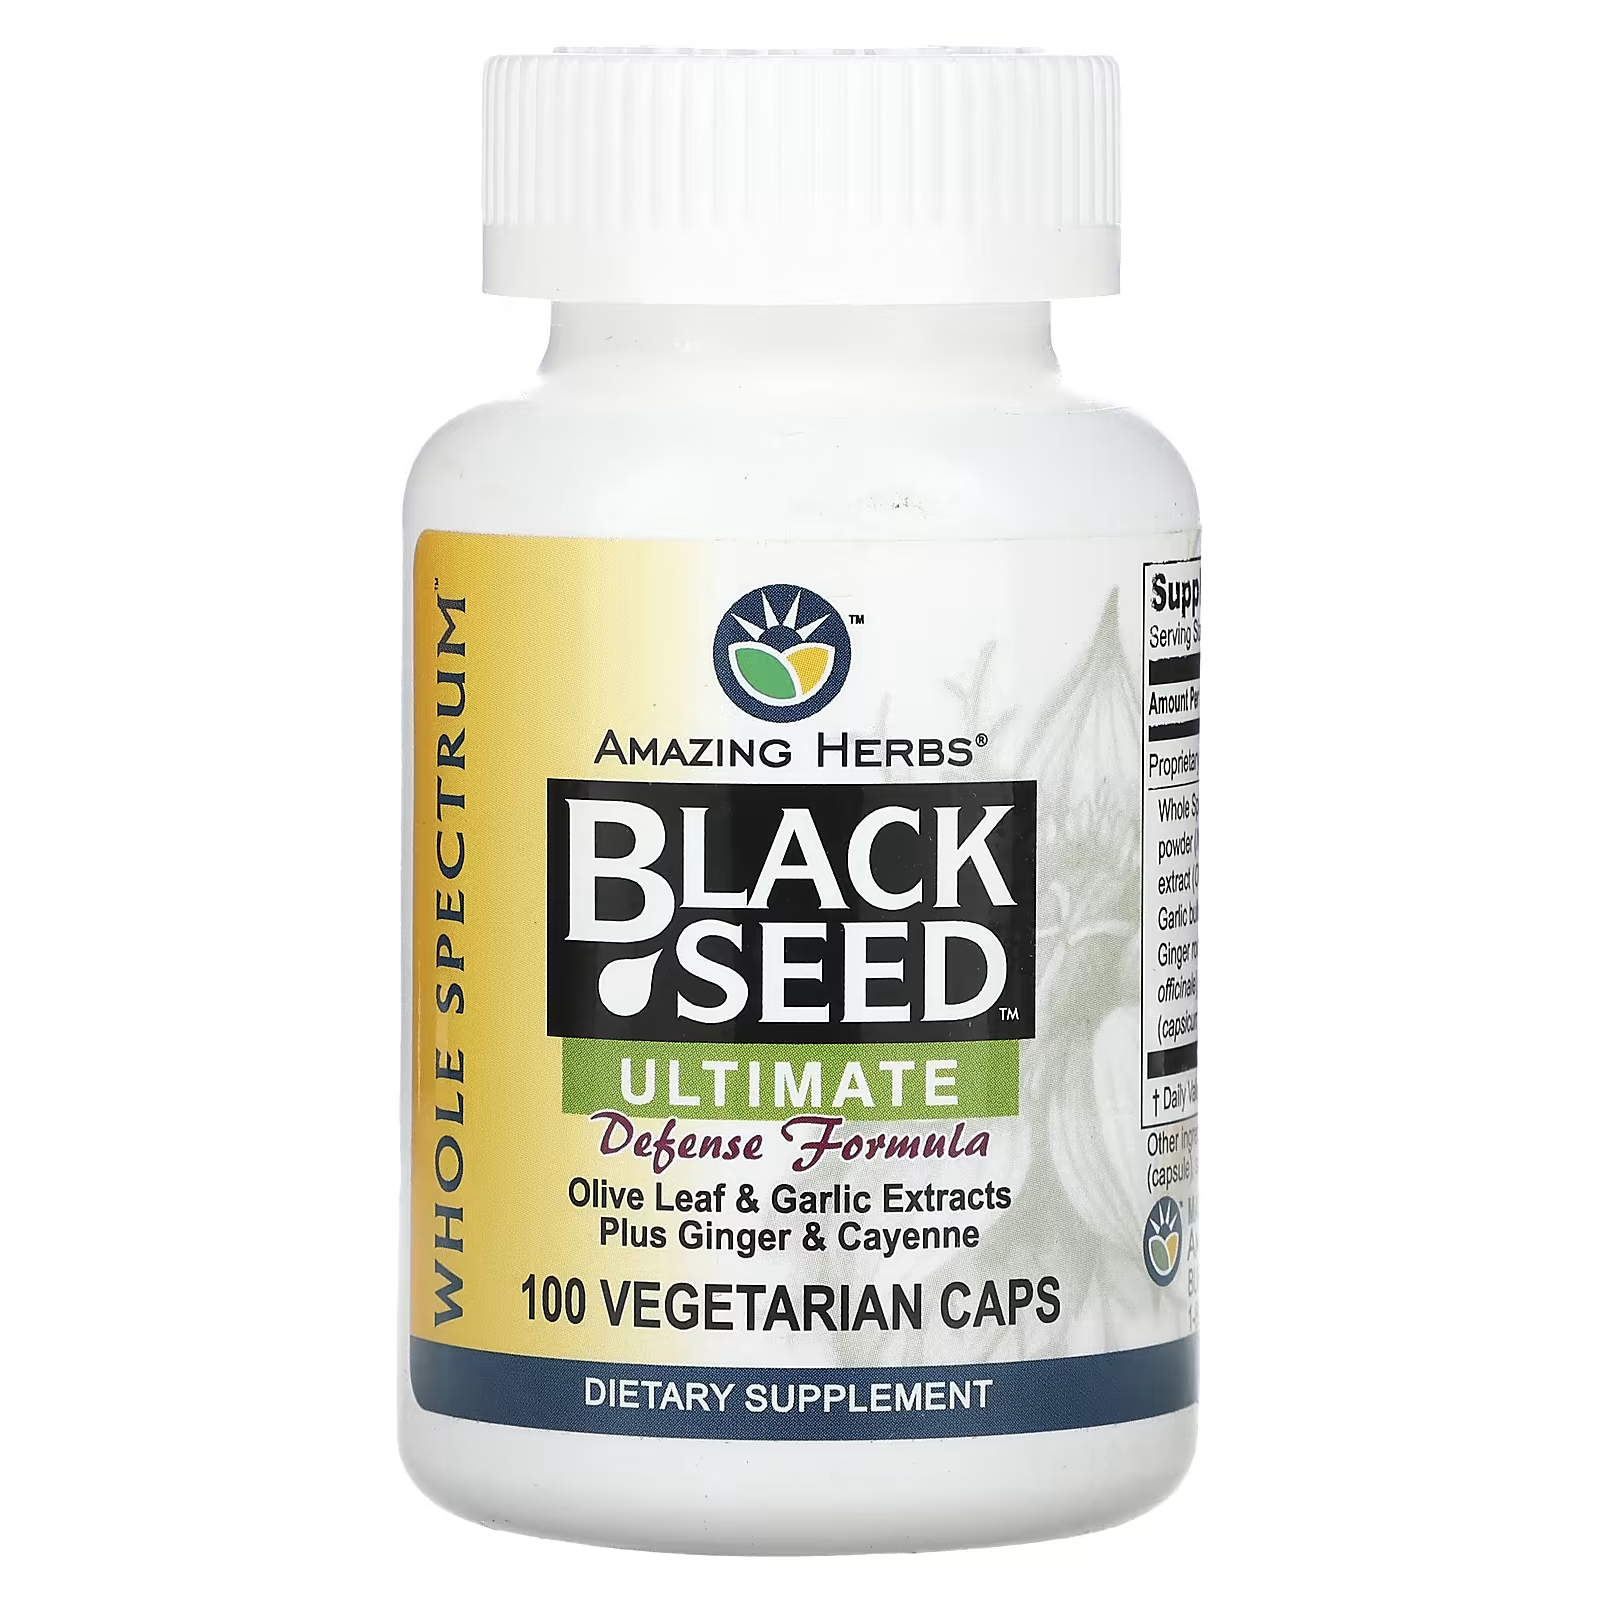 amazing herbs black seed original plain 100 вегетарианских капсул Пищевая добавка Amazing Herbs Black Seed Ultimate Defense Formula, 100 капсул